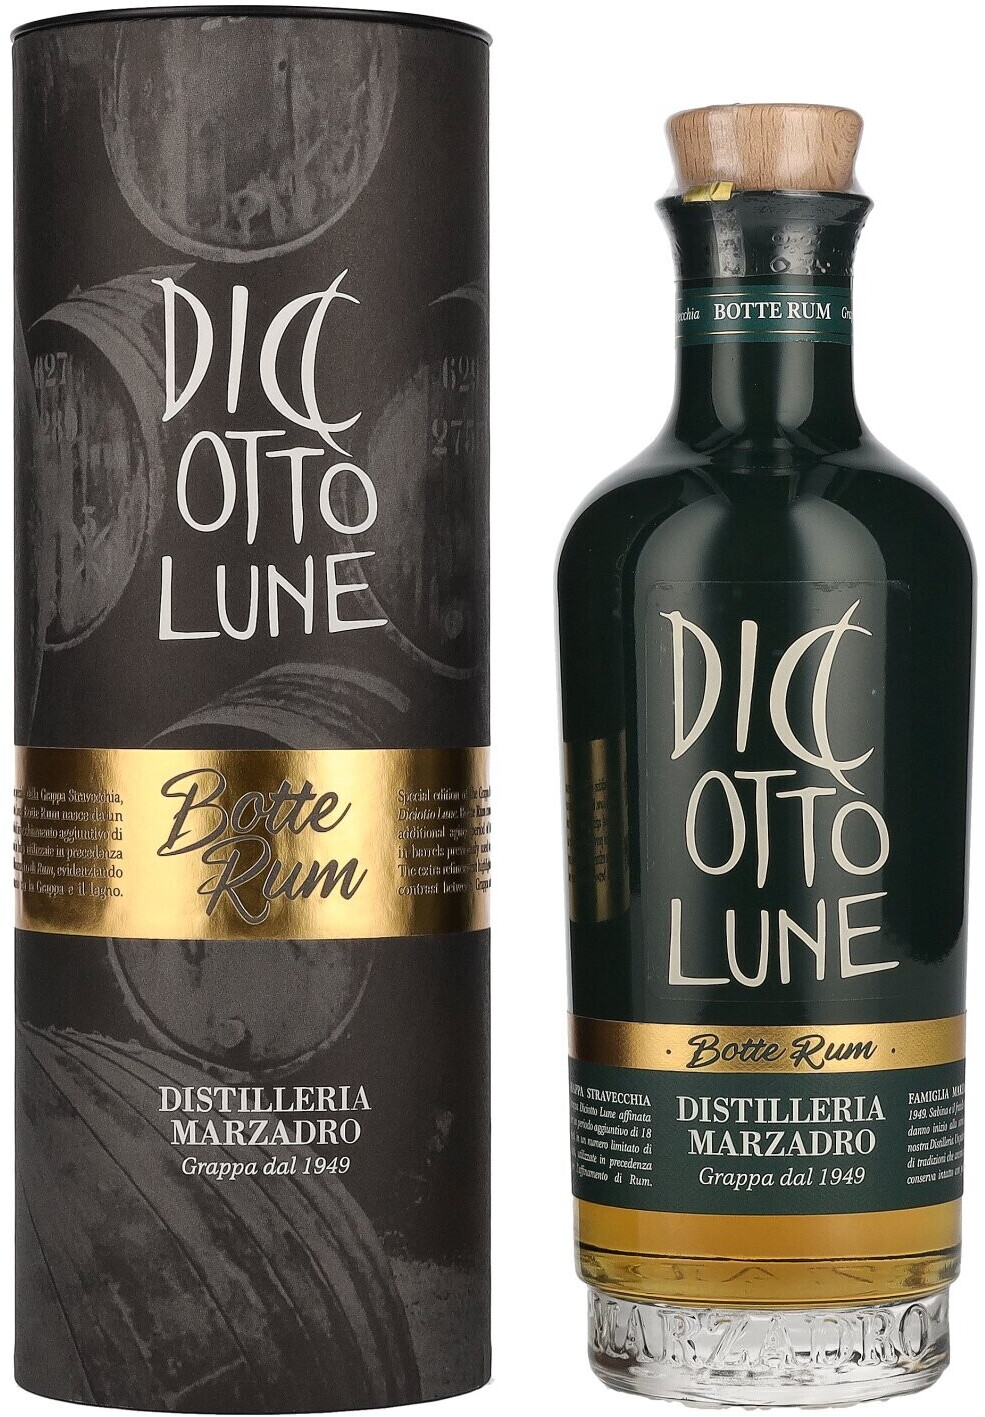 Botte Rum 42% € Lune Diciotto ab 26,90 Preisvergleich | Marzadro bei 0,5l